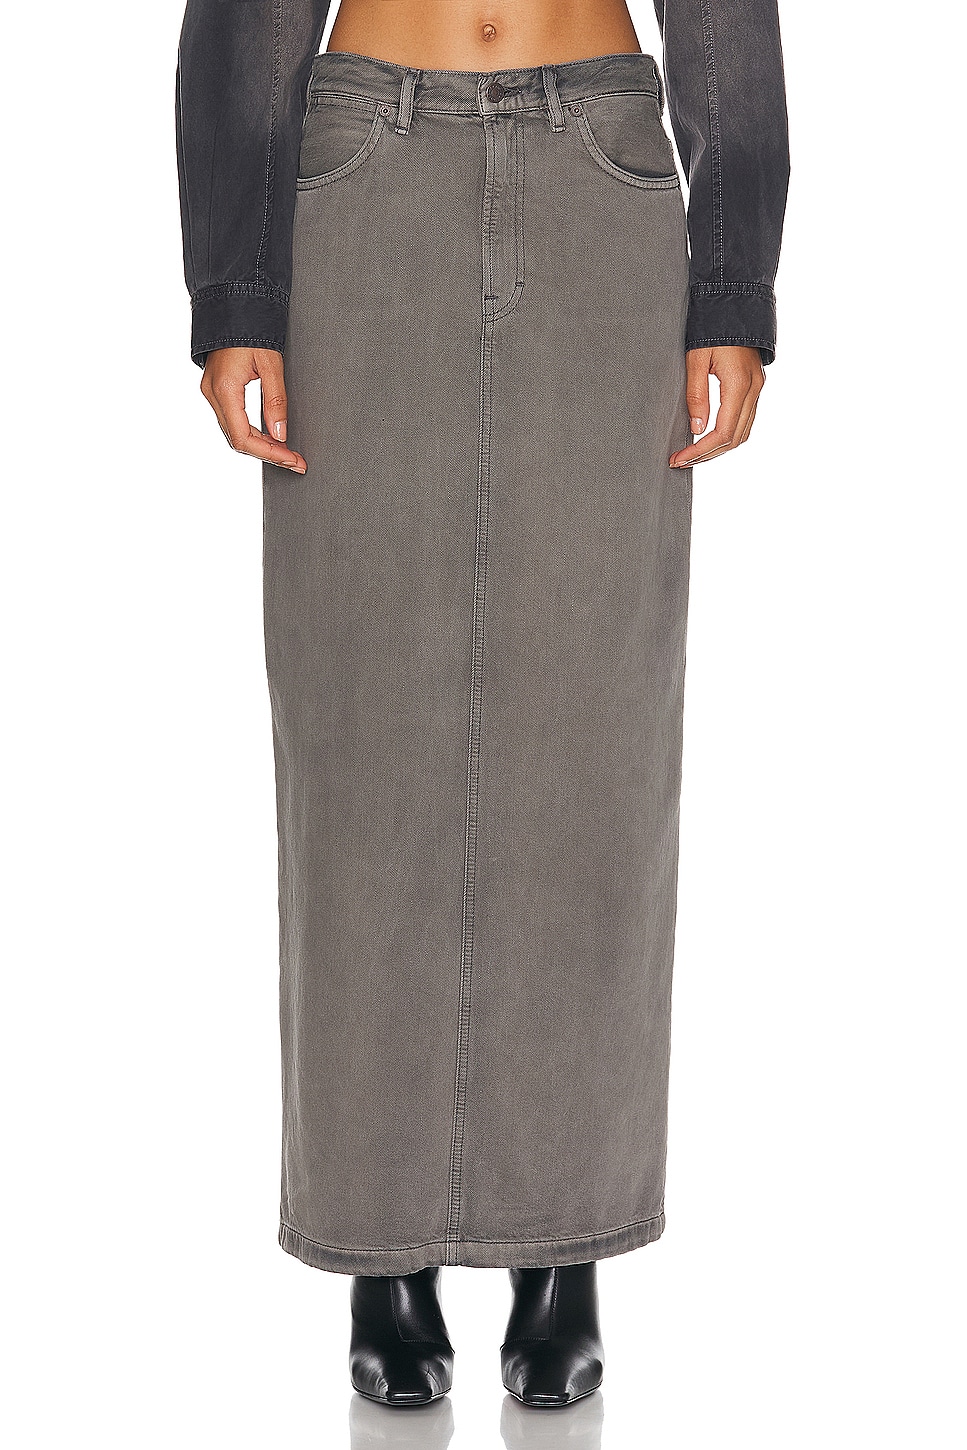 Image 1 of Acne Studios Denim Skirt in Anthracite Grey